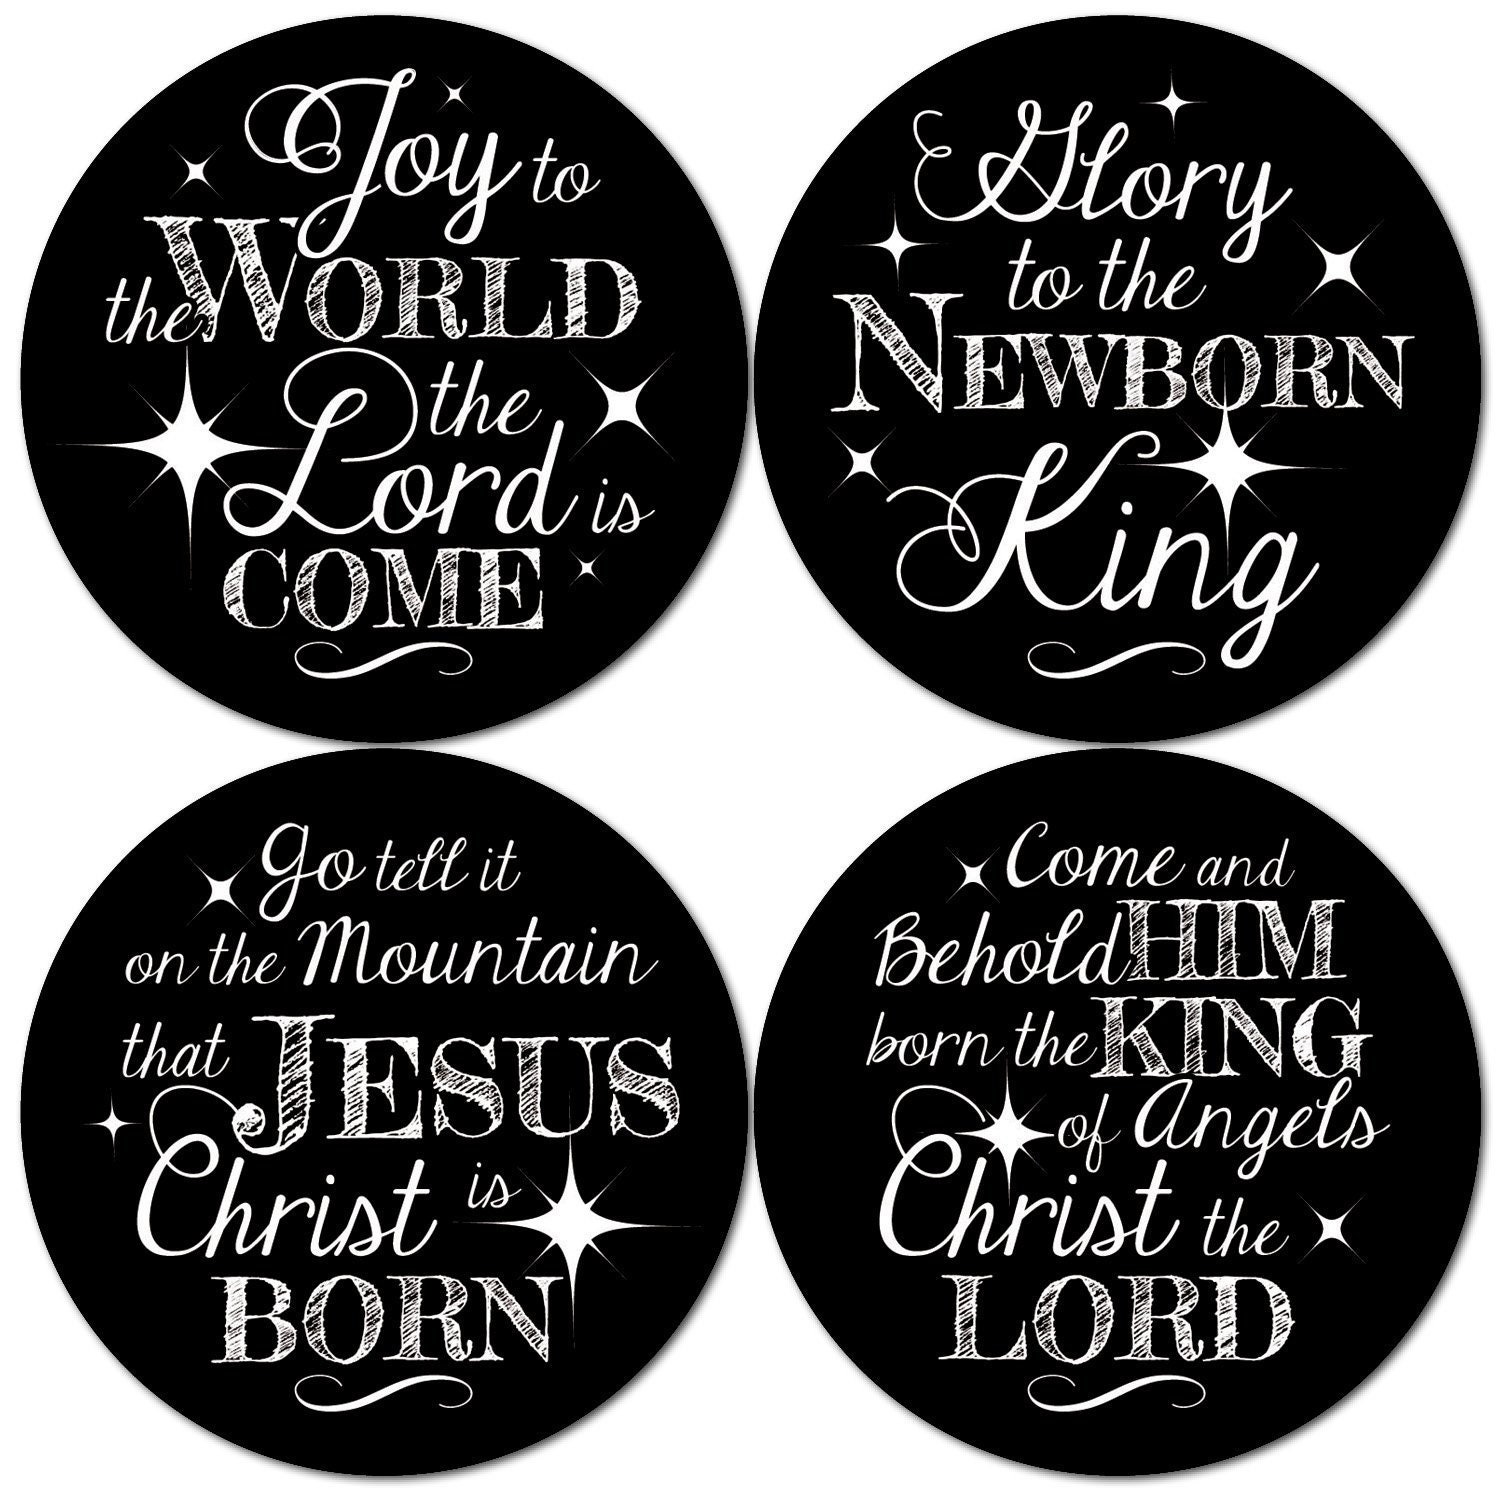 Christmas Foam Stickers, to Create the Nativity Scene, 17 Stickers